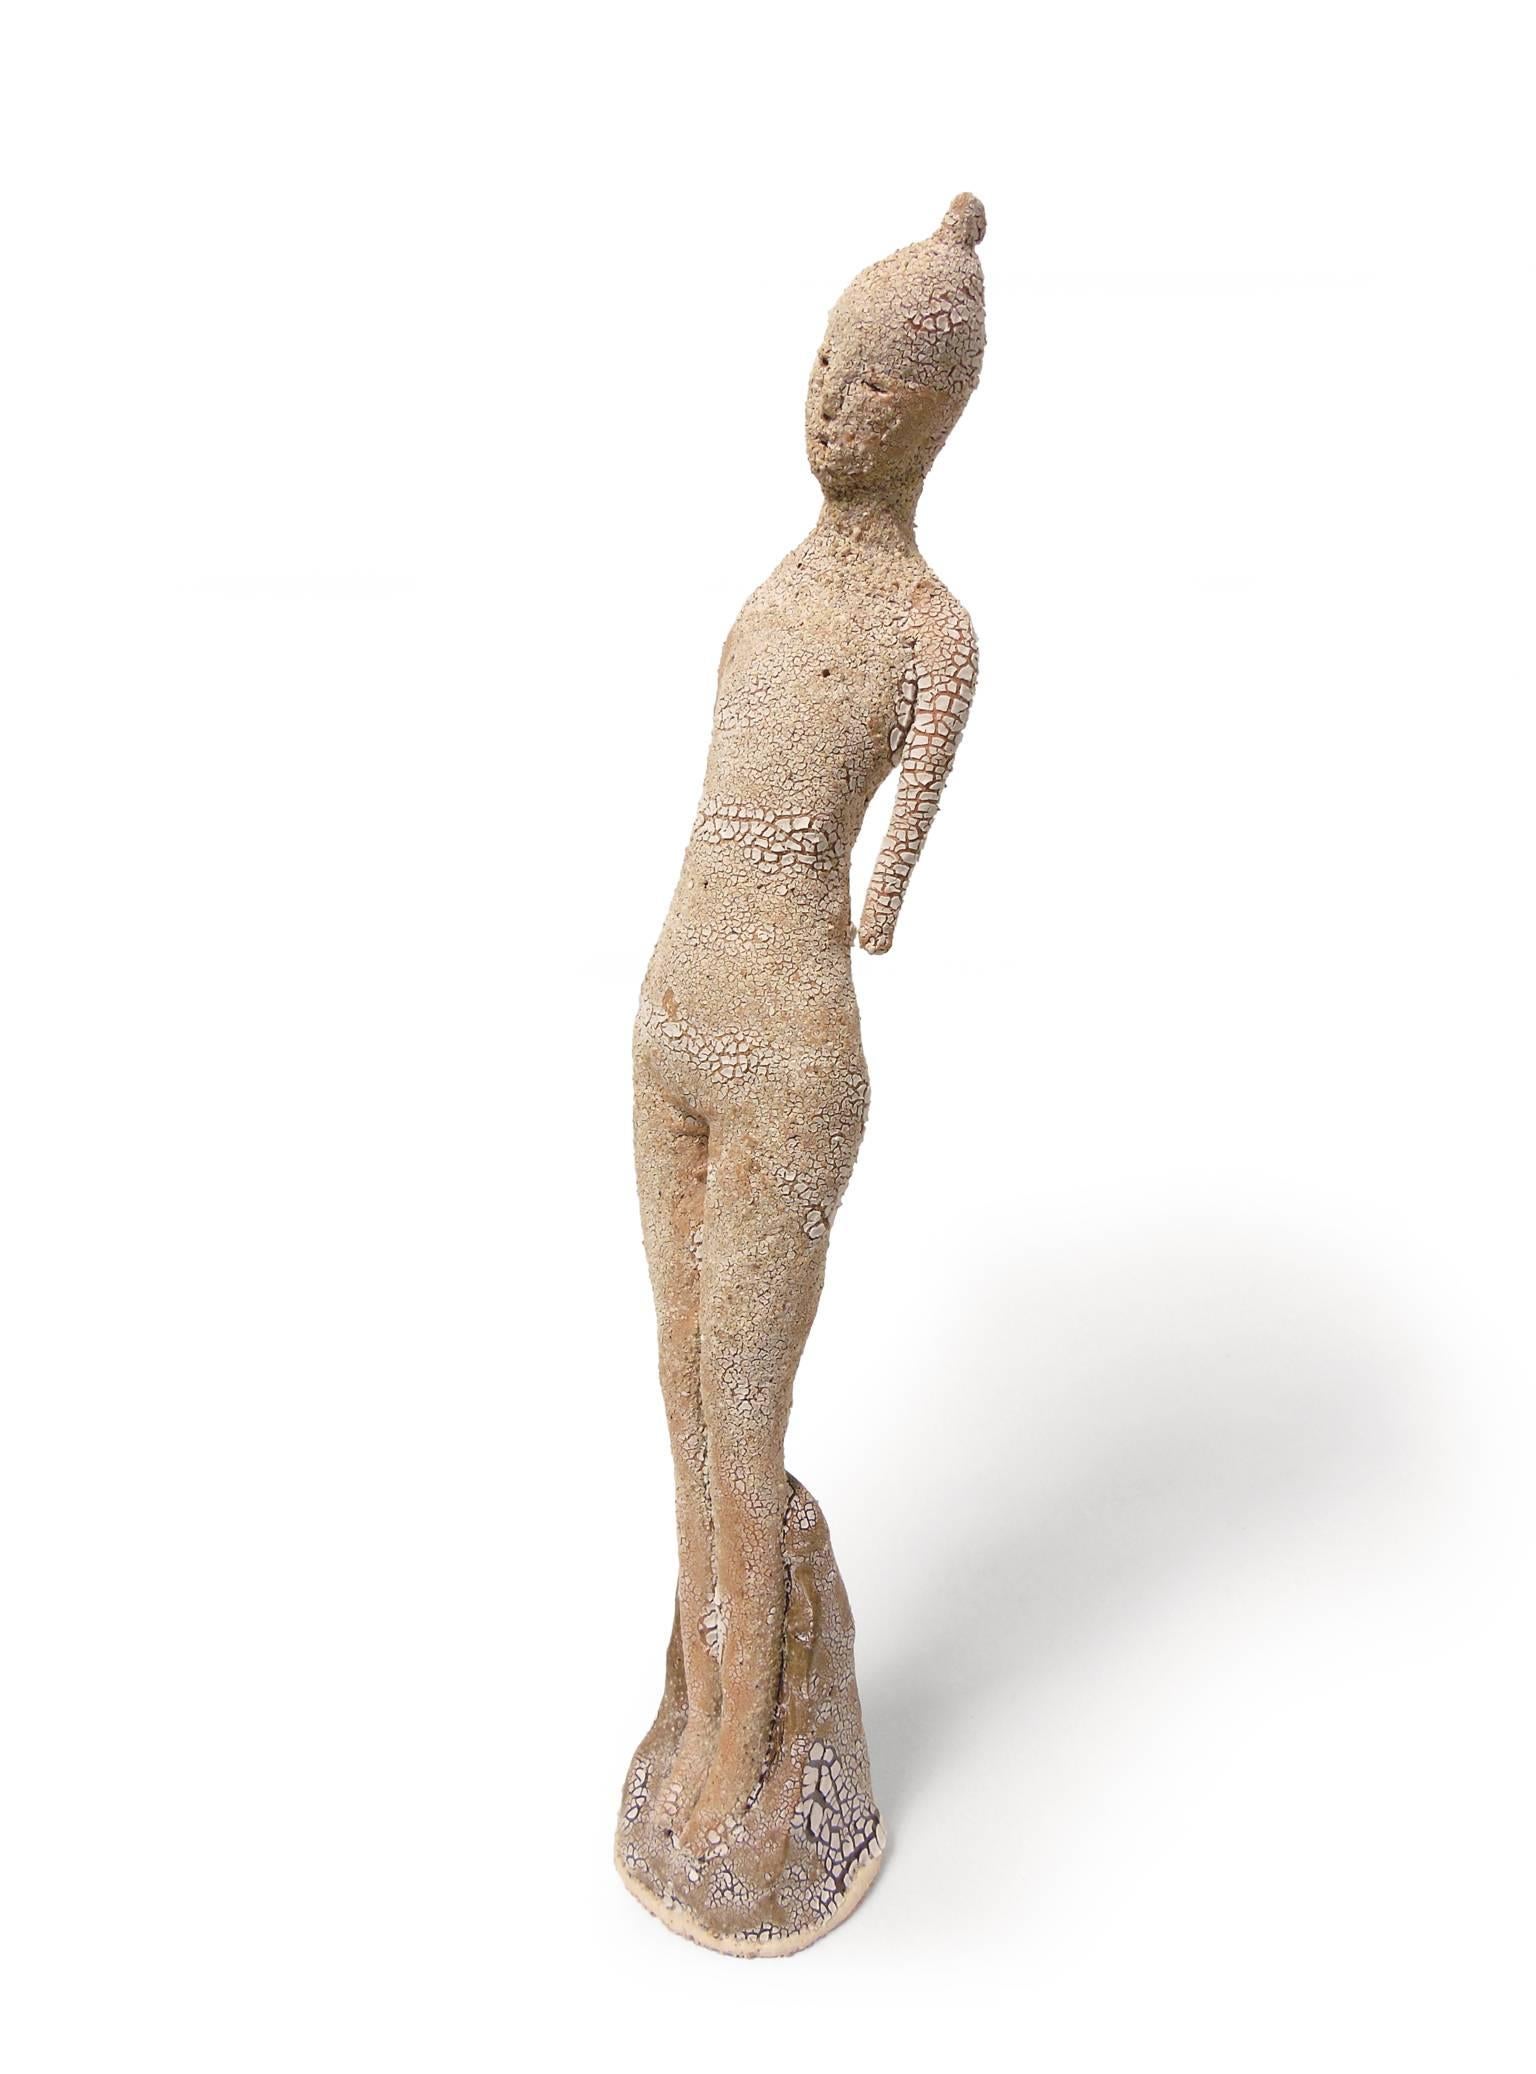 Standing Goddess - Sculpture by Robin Whiteman